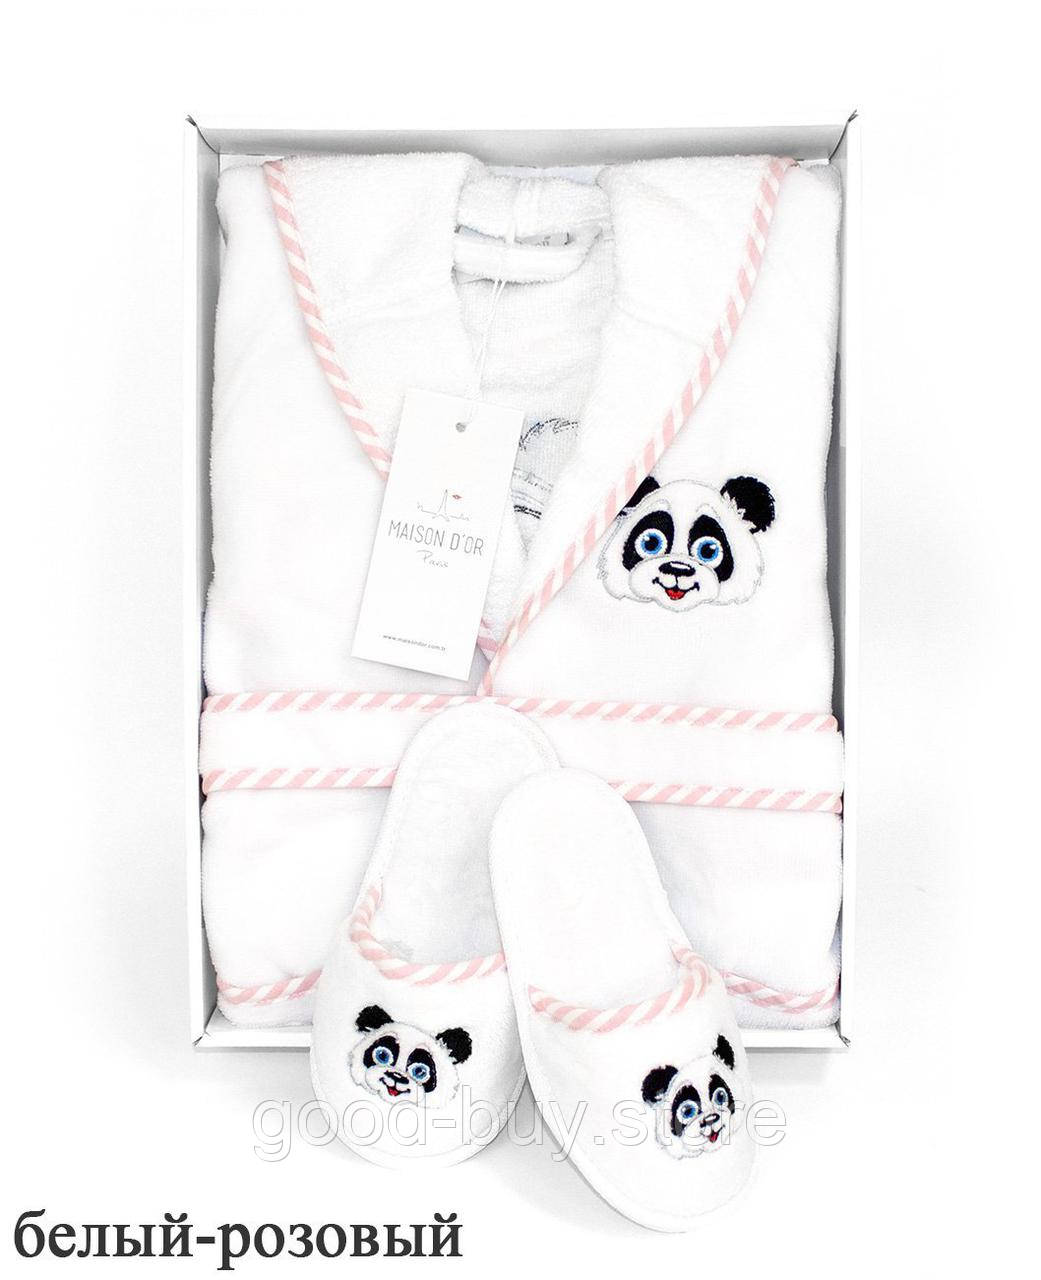 Maison d'or Luna Enfants Панда дитячий махровий халат з тапочками